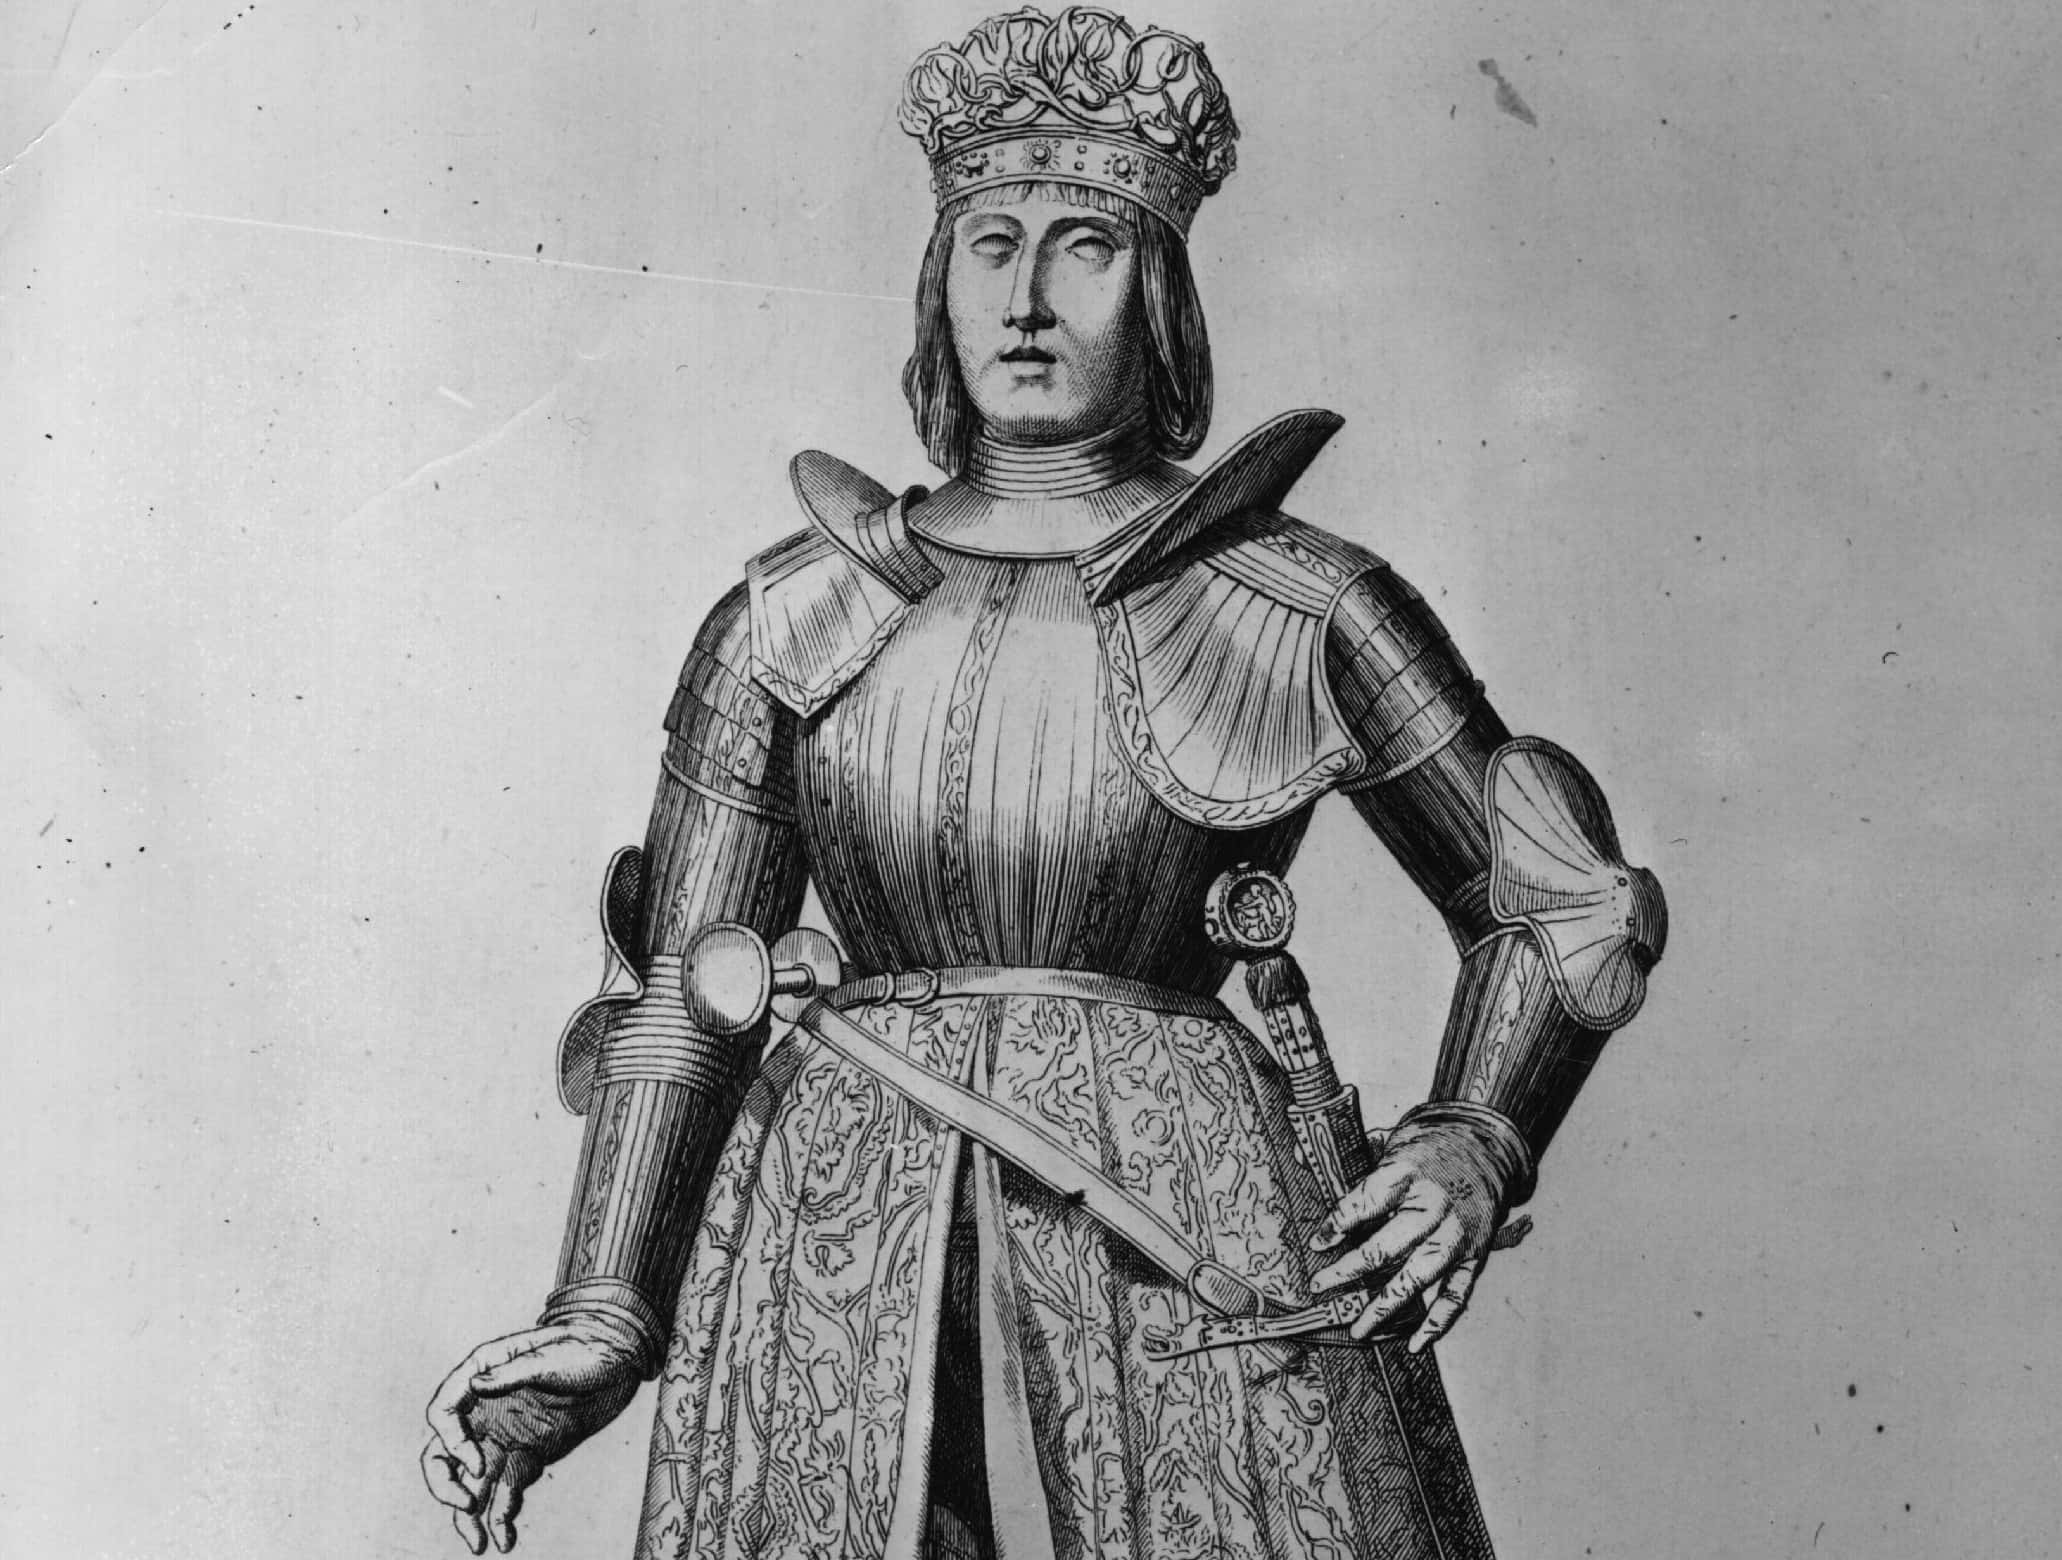 Joanna Of Castile facts